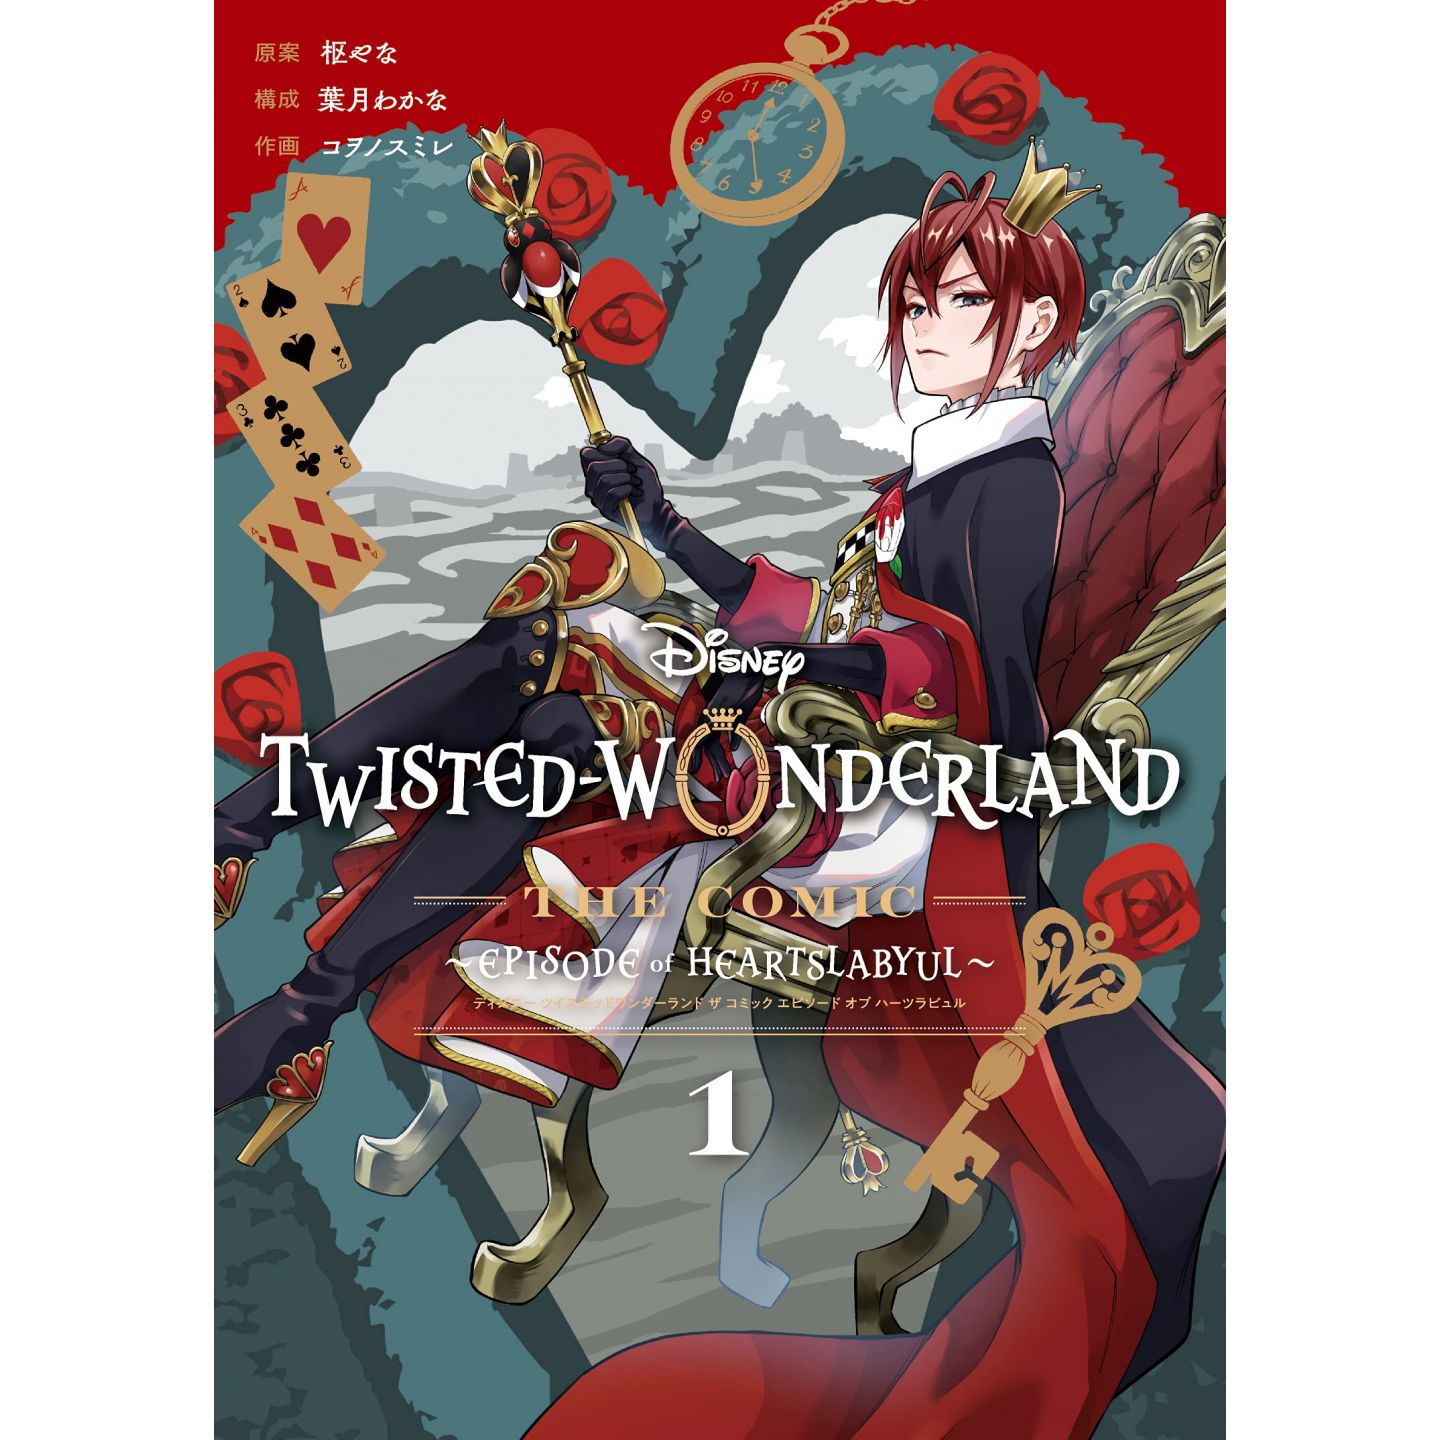 https://www.japanzon.com/119008-product_hd/disney-twisted-wonderland-the-comic-episode-of-heartslabyul-vol1-g-fantasy-comics-japanese-version.jpg